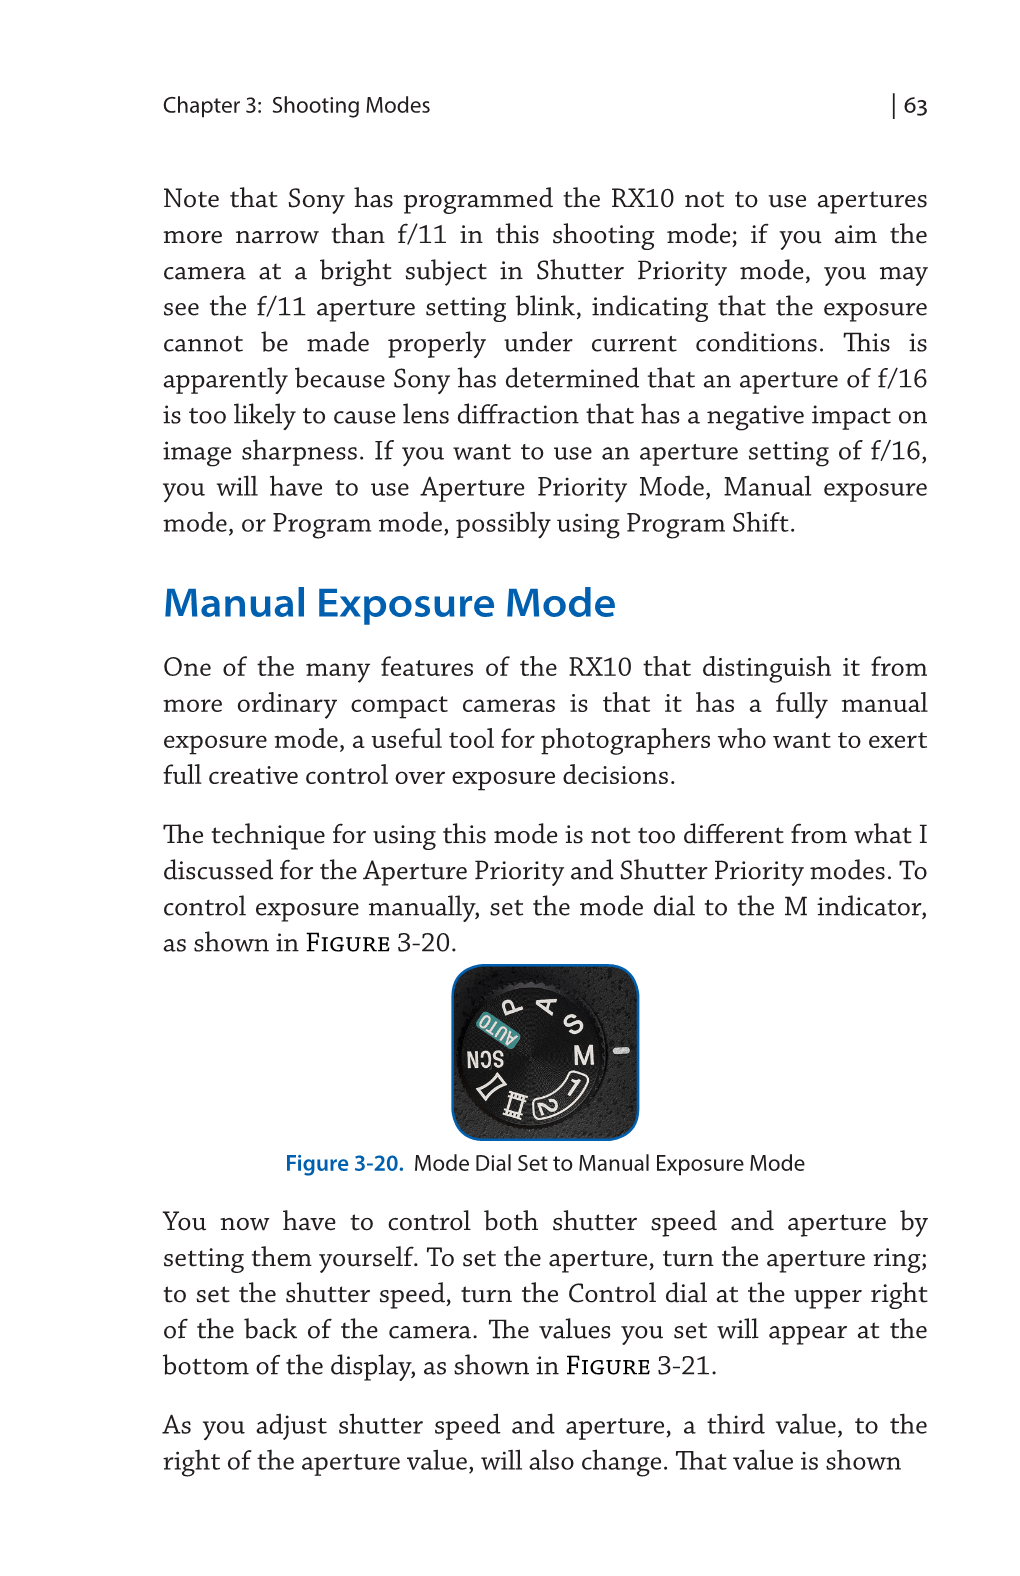 Manual Exposure Mode, Or Program Mode, Possibly Using Program Shift